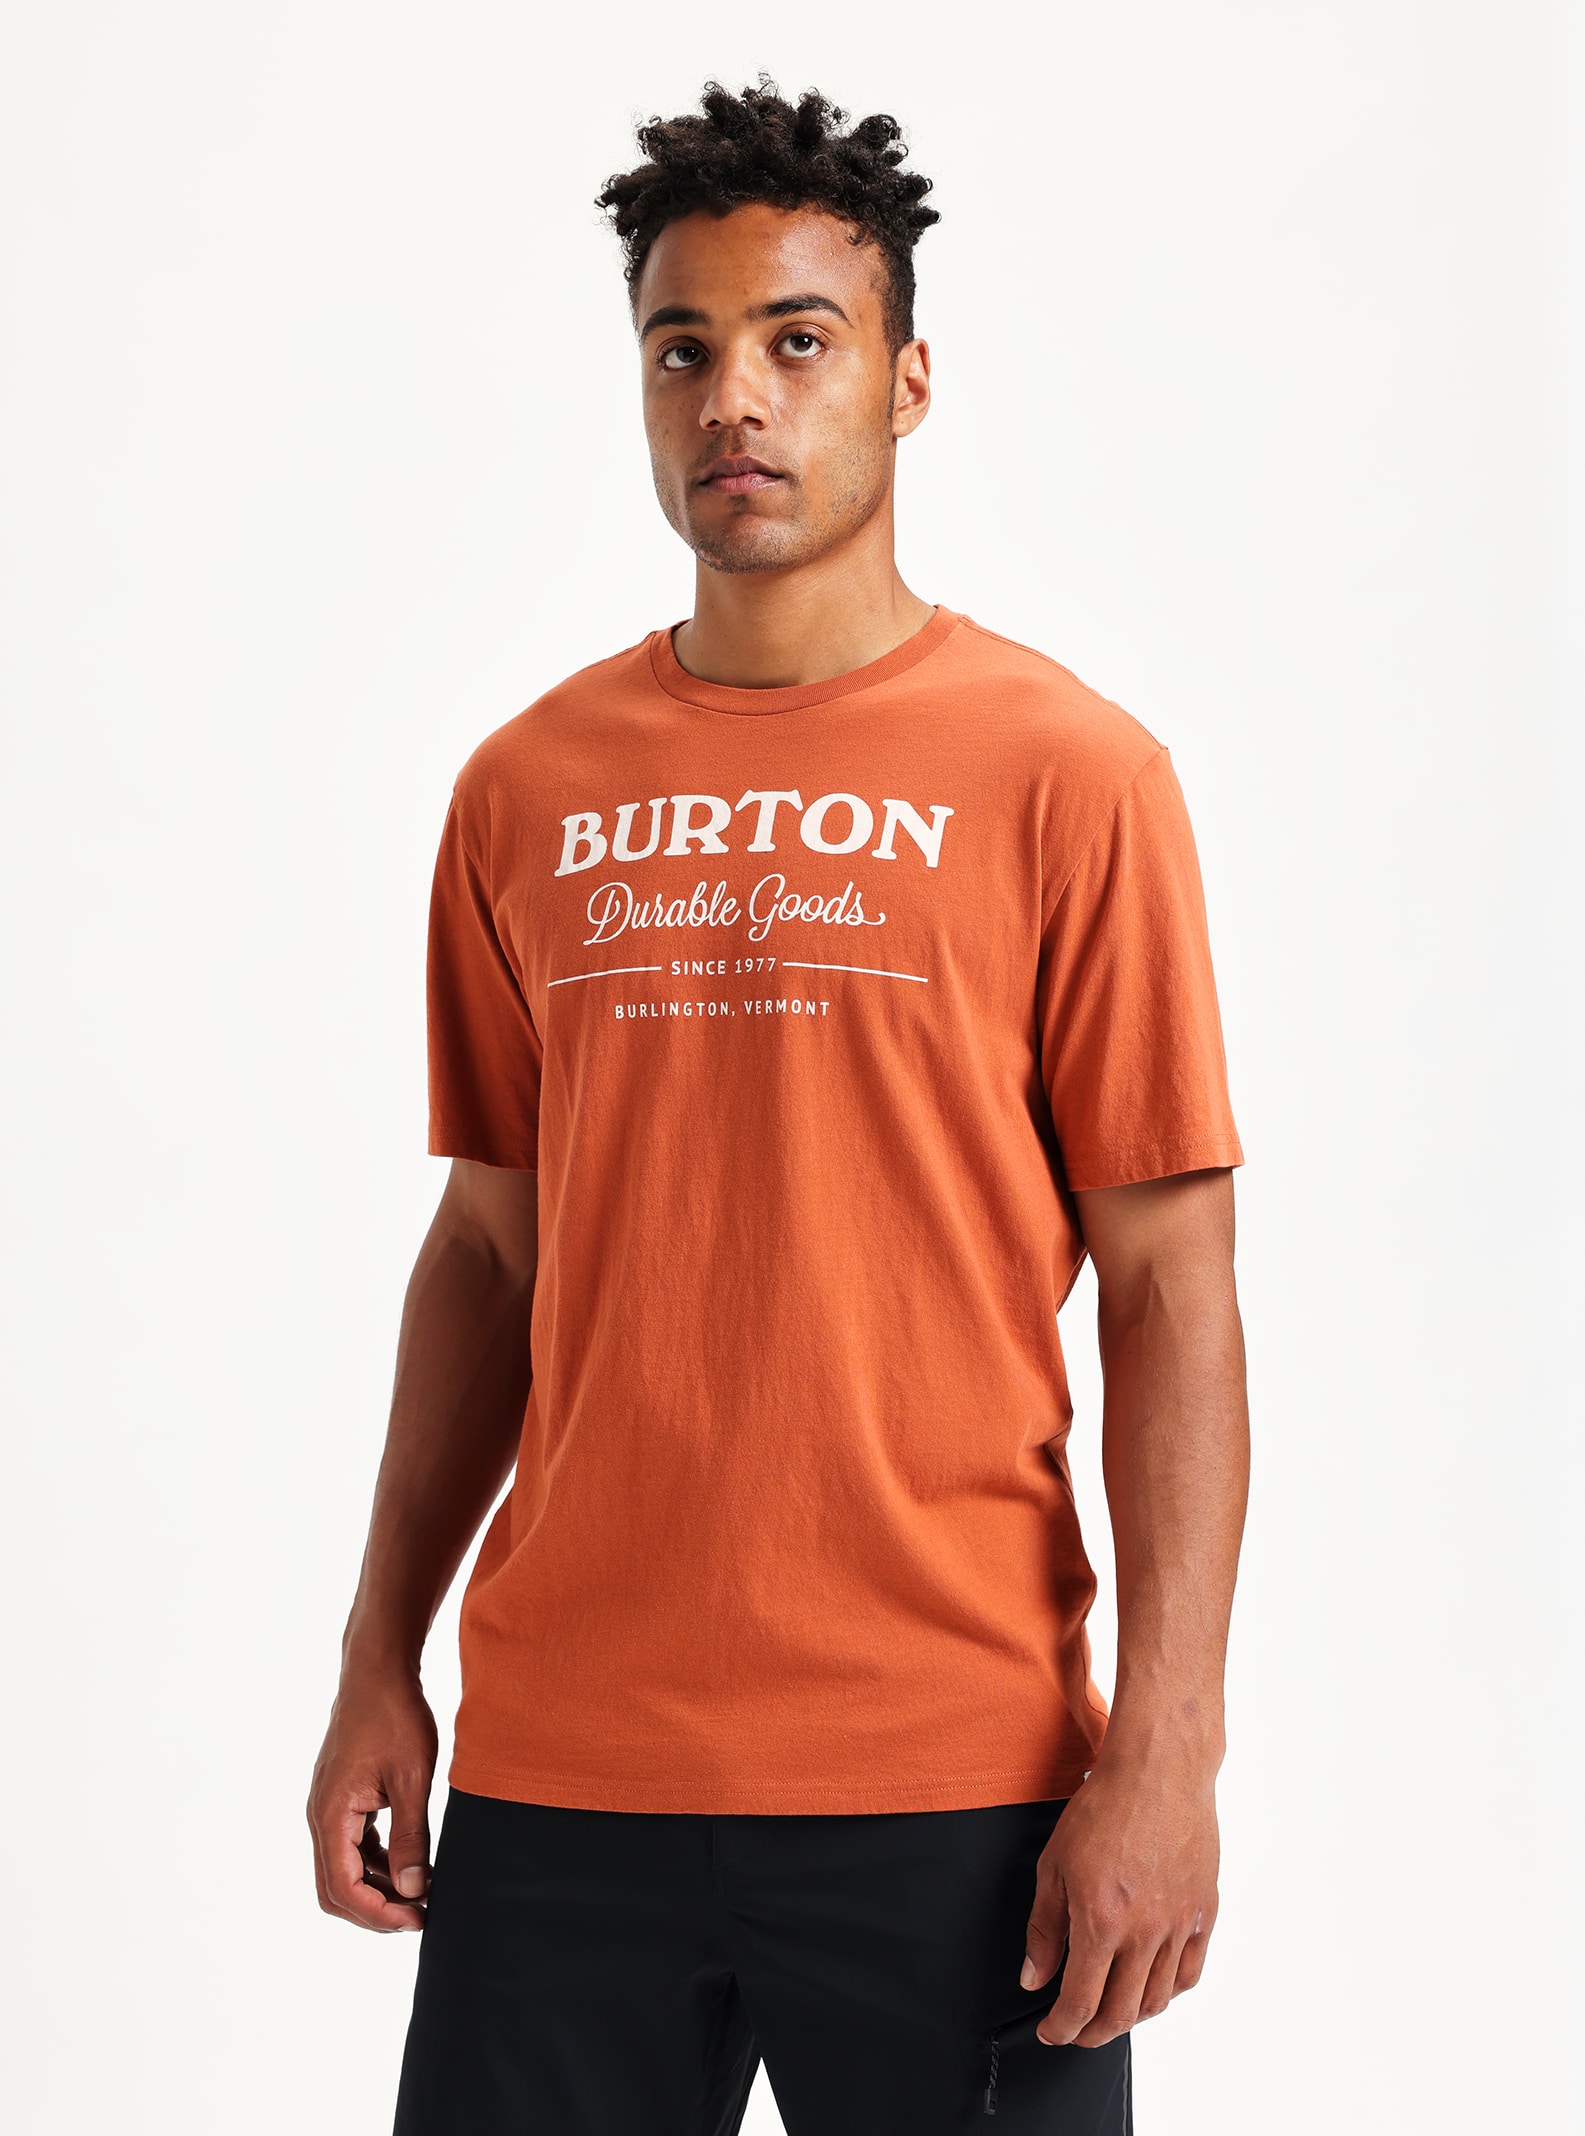 Burton Durable Goods Short Sleeve T-Shirt | Burton.com Spring 2022 US